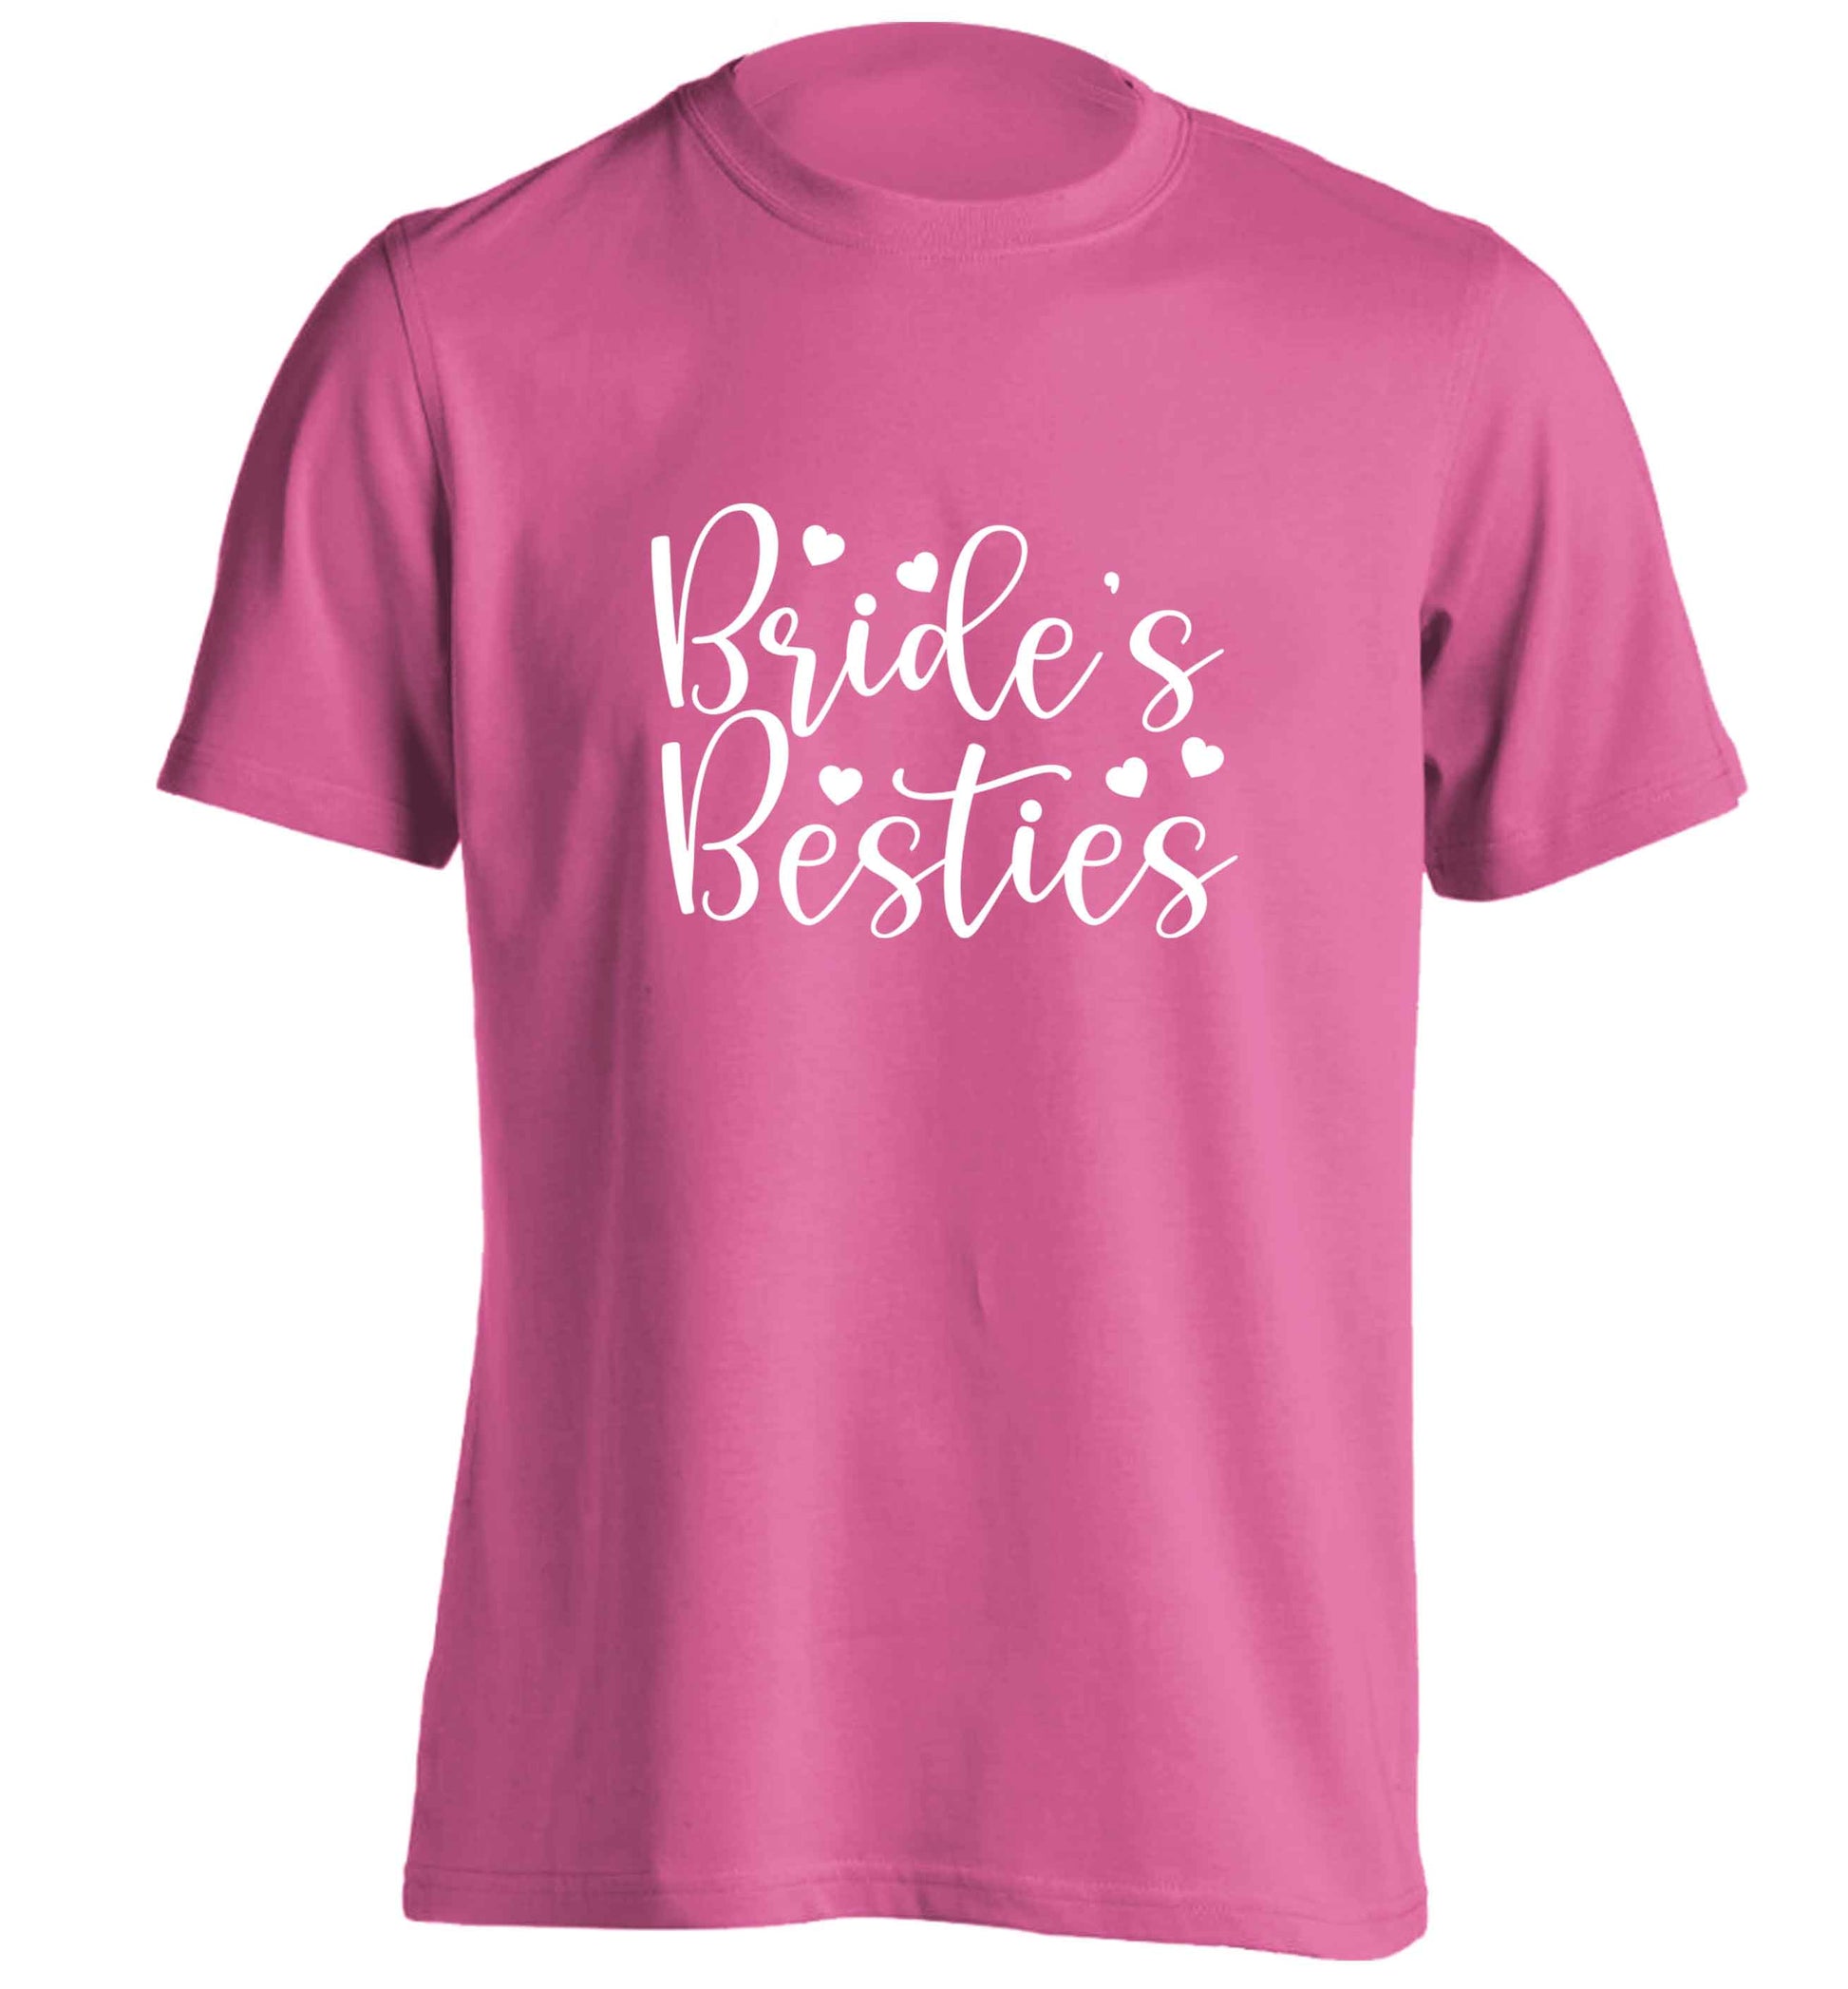 Brides besties adults unisex pink Tshirt 2XL